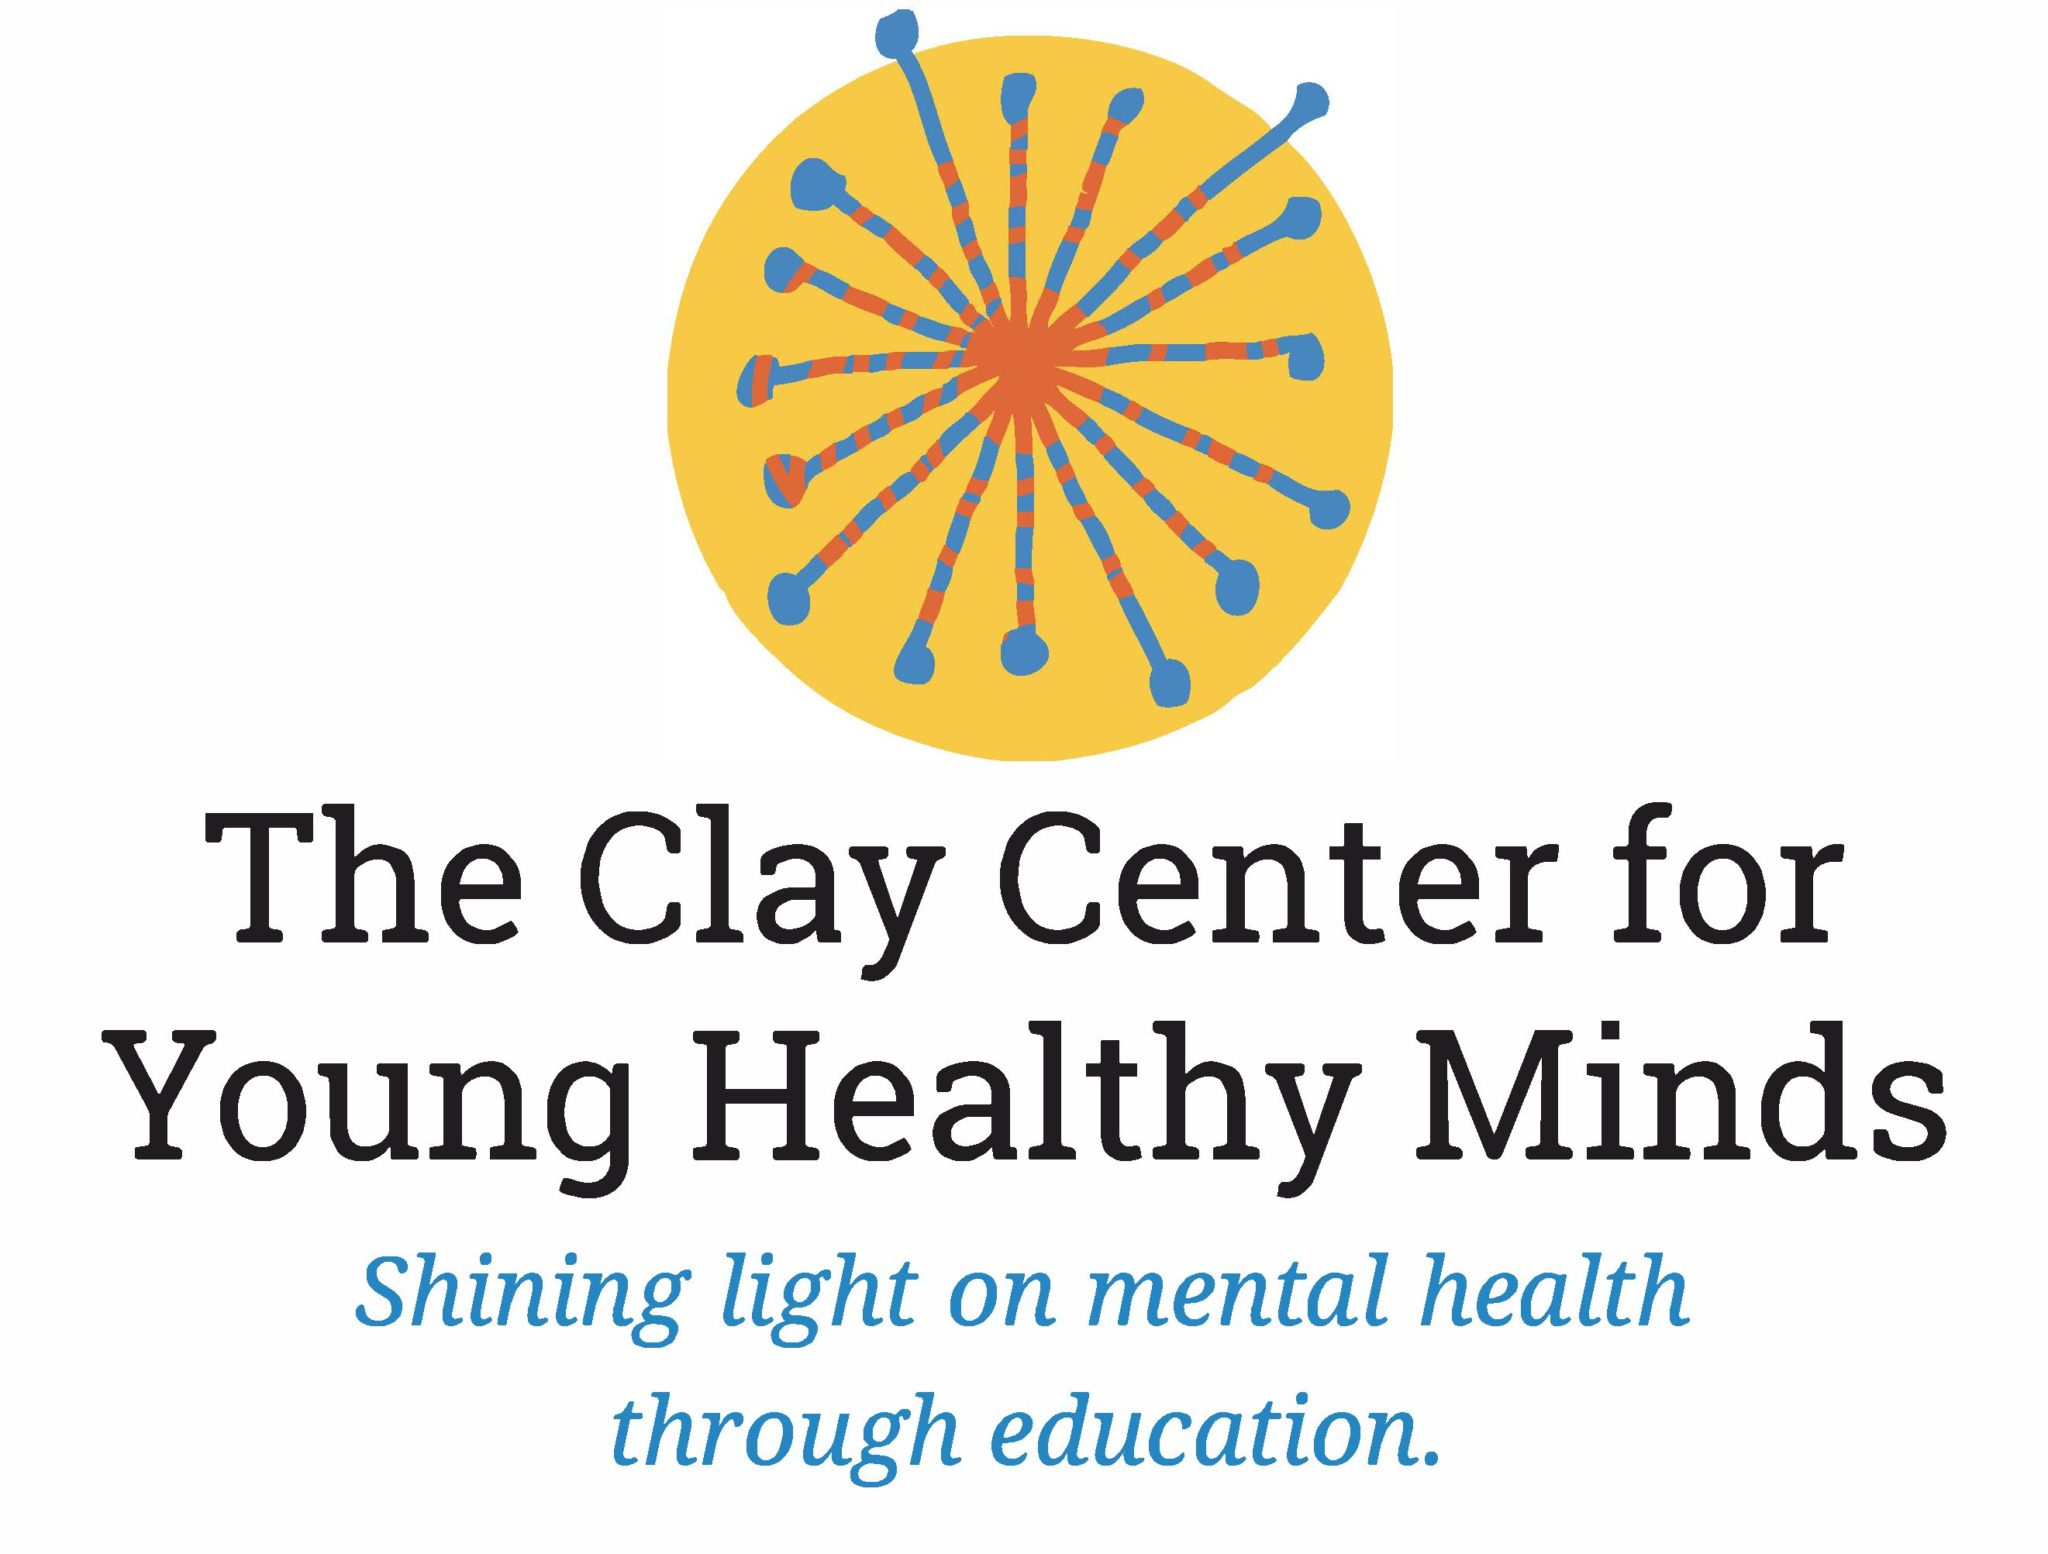 shining light on mental health through education